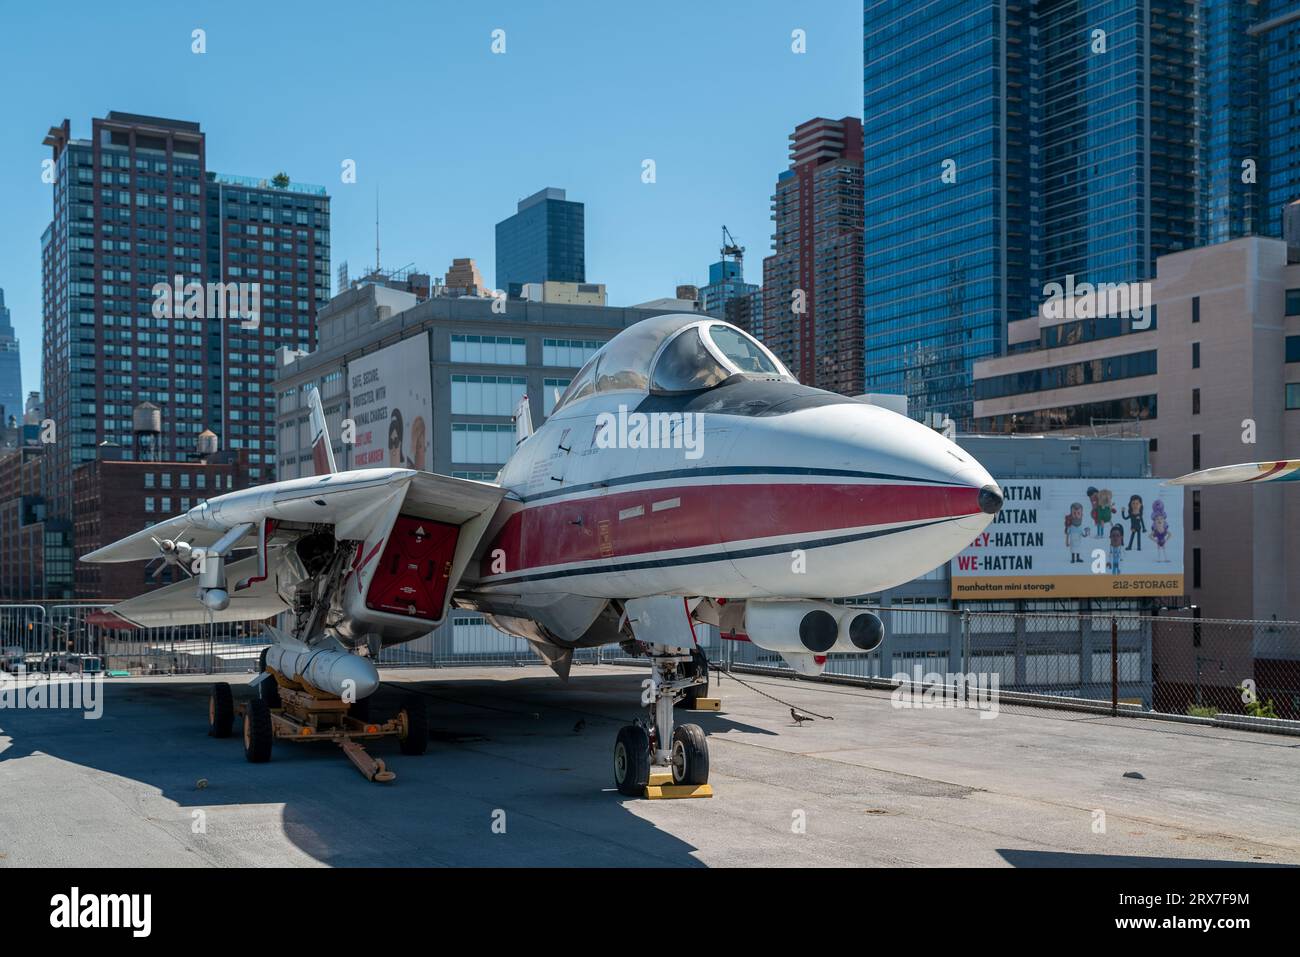 15.09.23. USA, NYC. Famosa zattera nel museo Intrepid Sea, Air & Space. Mostra di aerei iconici a East River, Manhattan. Foto Stock